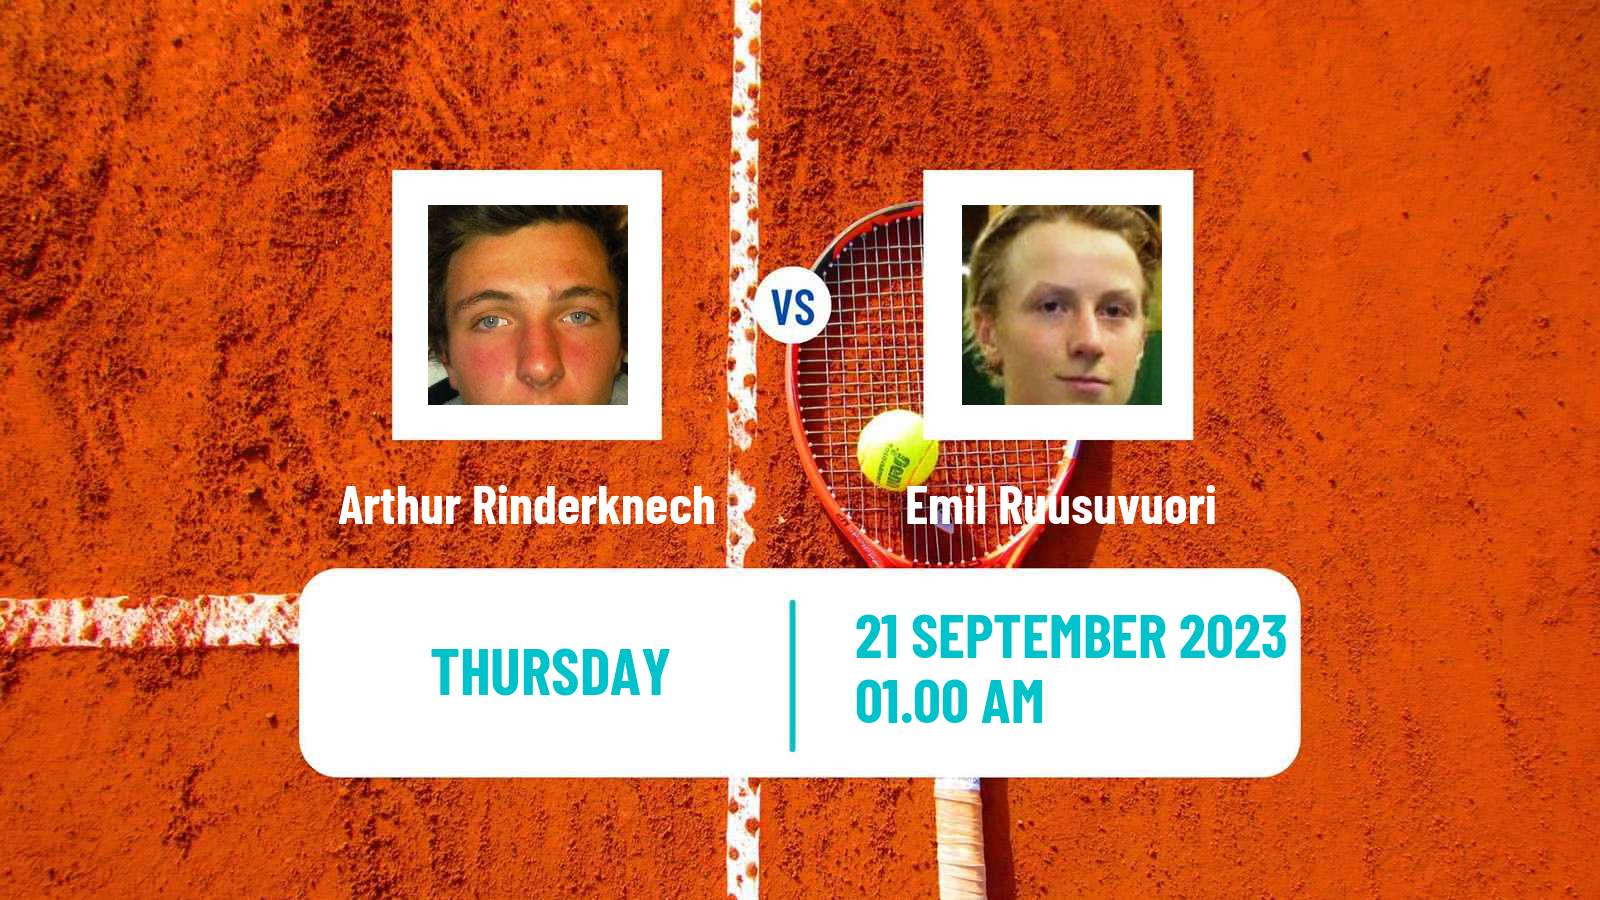 Tennis ATP Chengdu Arthur Rinderknech - Emil Ruusuvuori